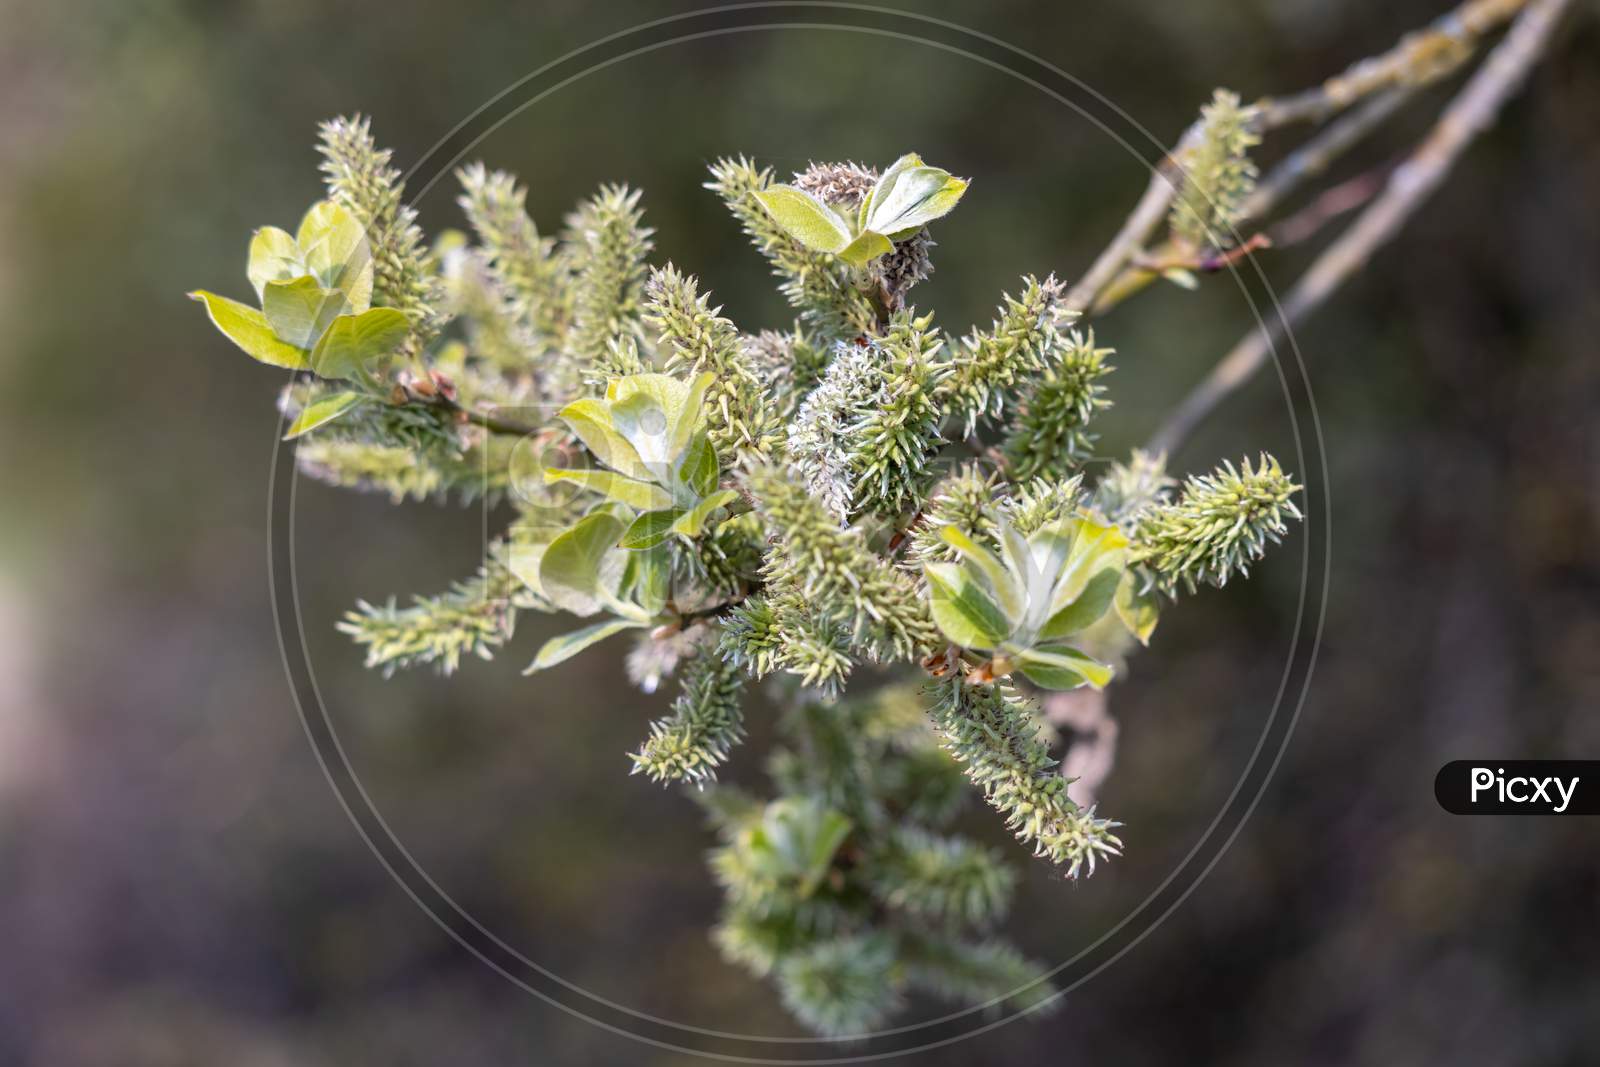 Apple-Leaved Willow (Salix Hastata)